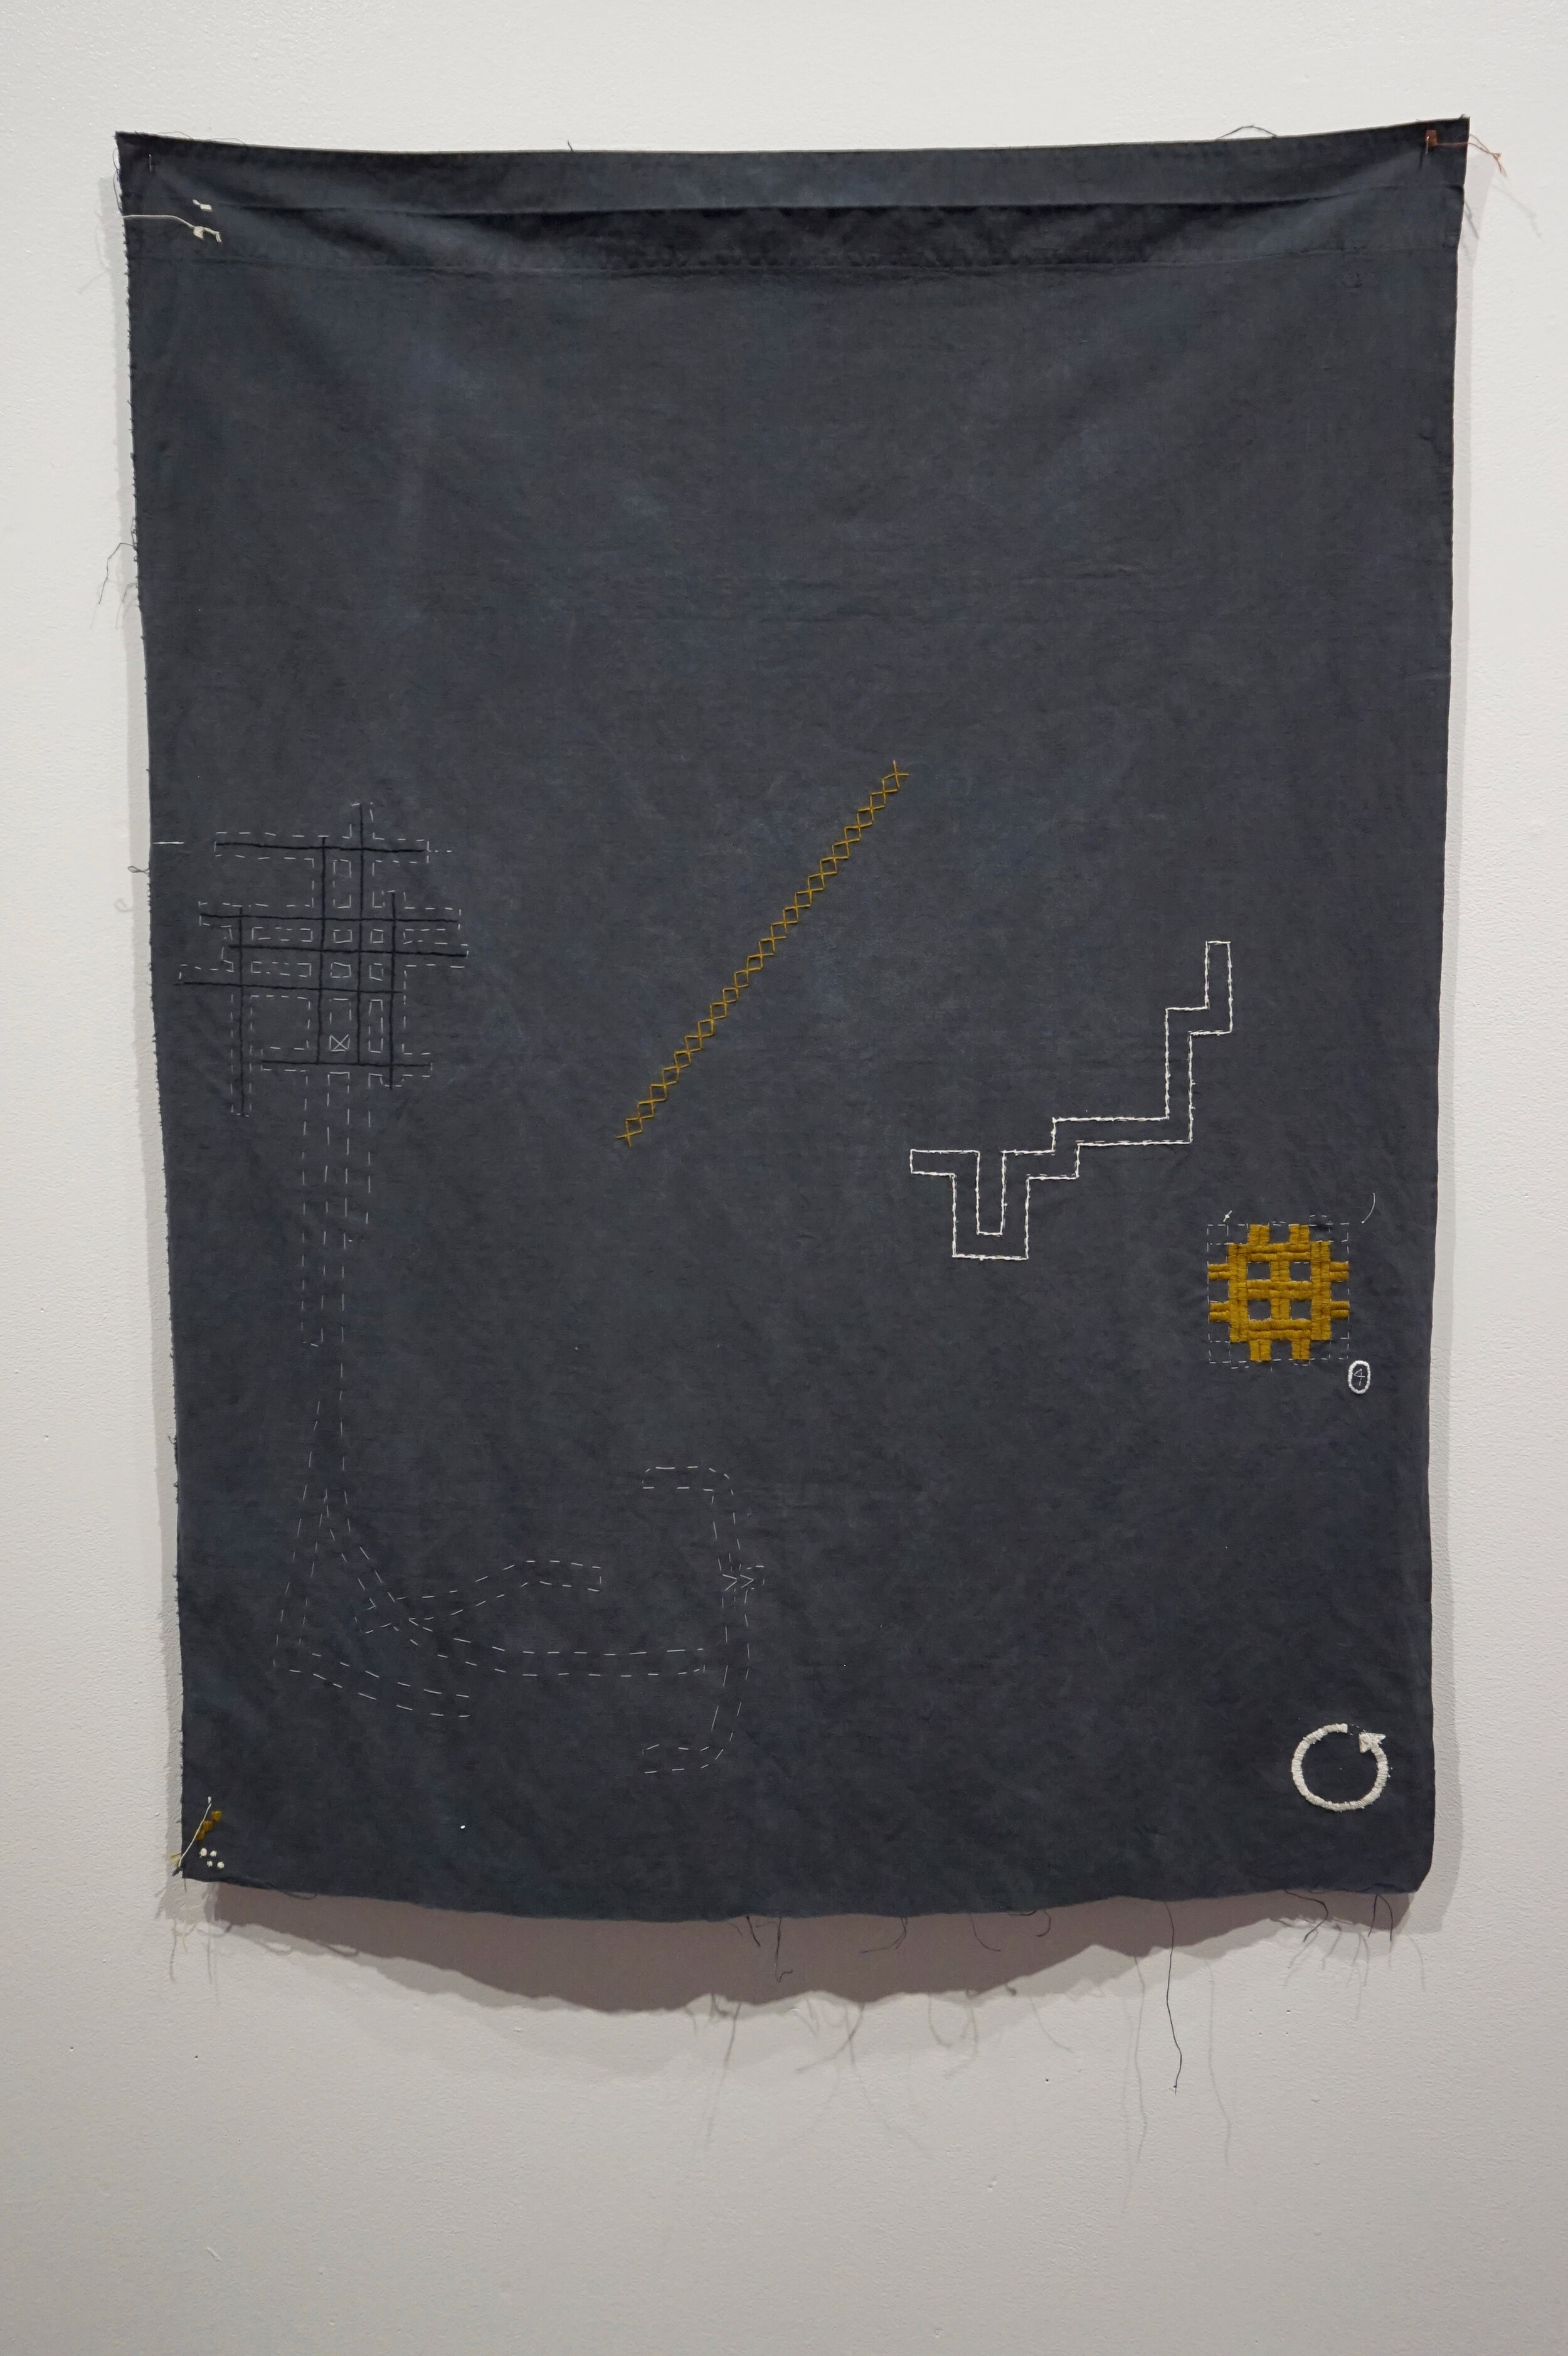 Language, 2019, Embroidery thread on found fabric, 32" x 43"